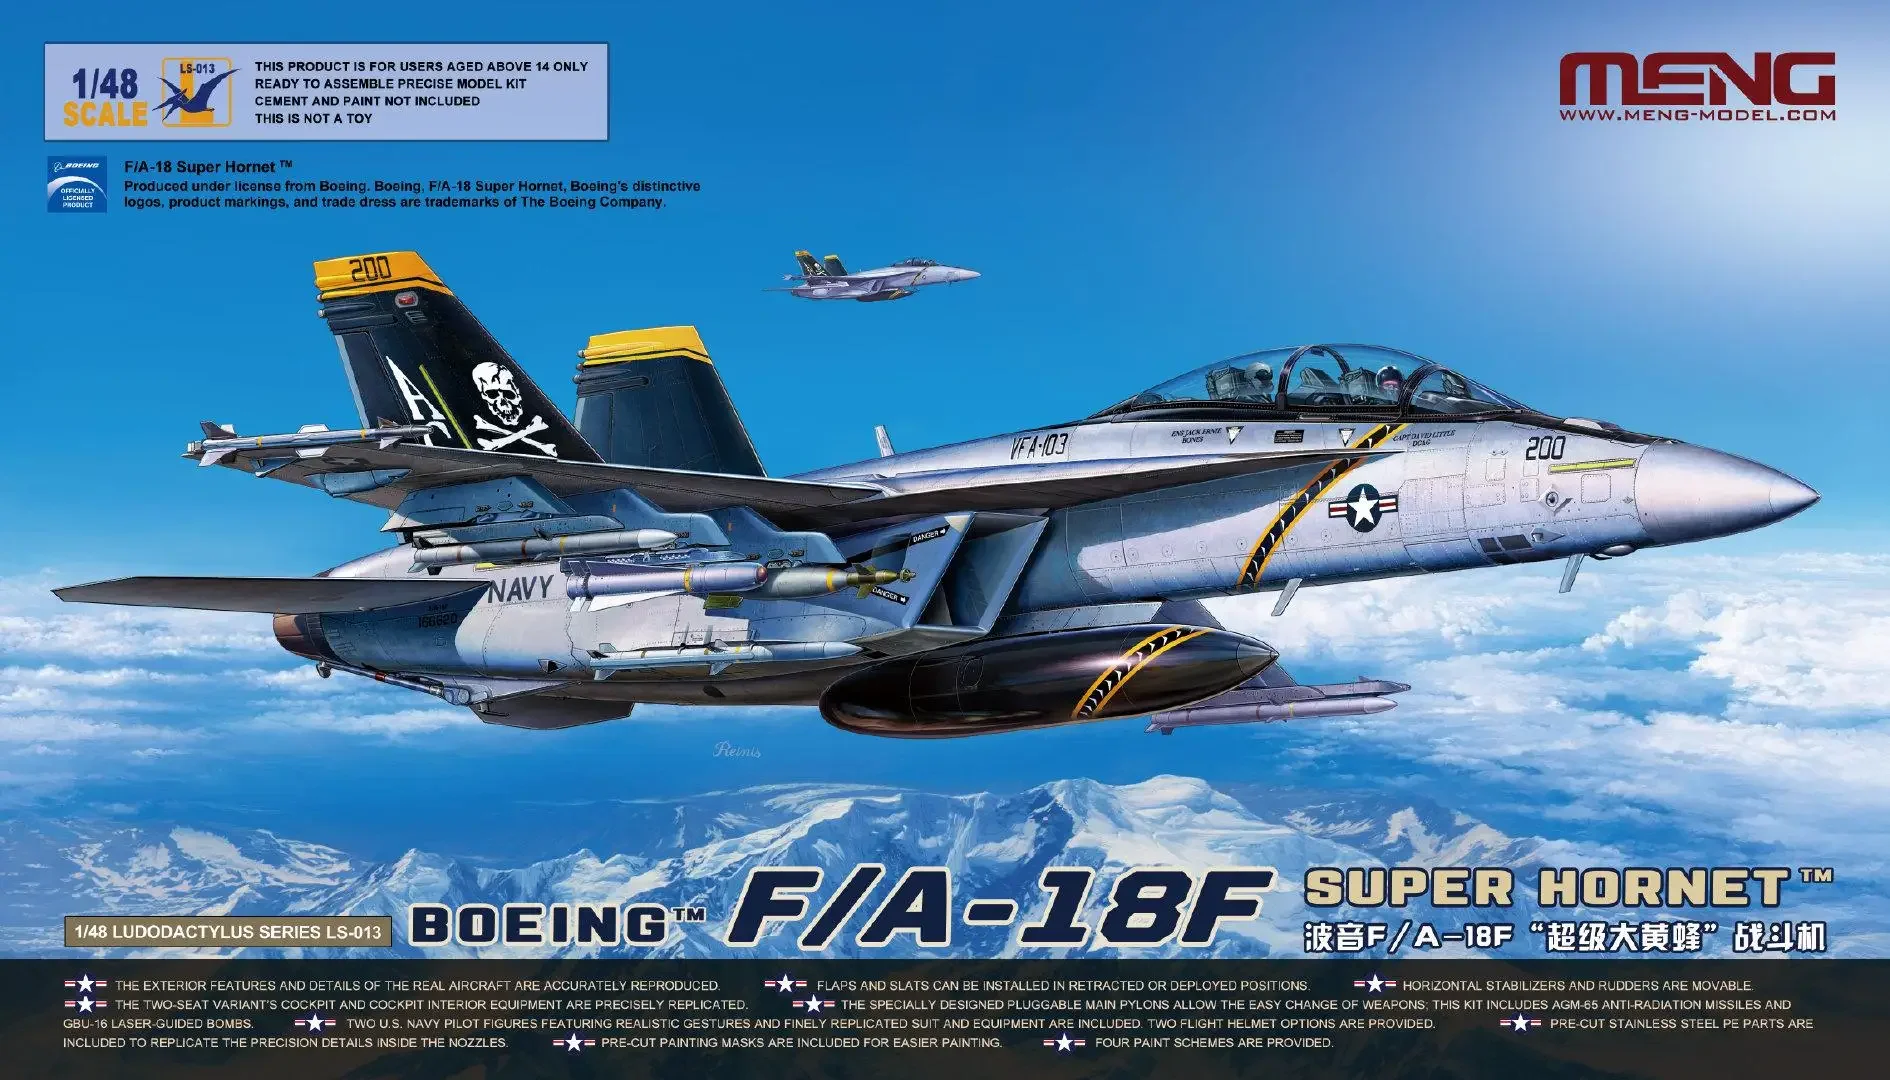 

MENG LS-013 1/48 Scale BOEING F/A-18F SUPER HORNET Plastic Model Kit